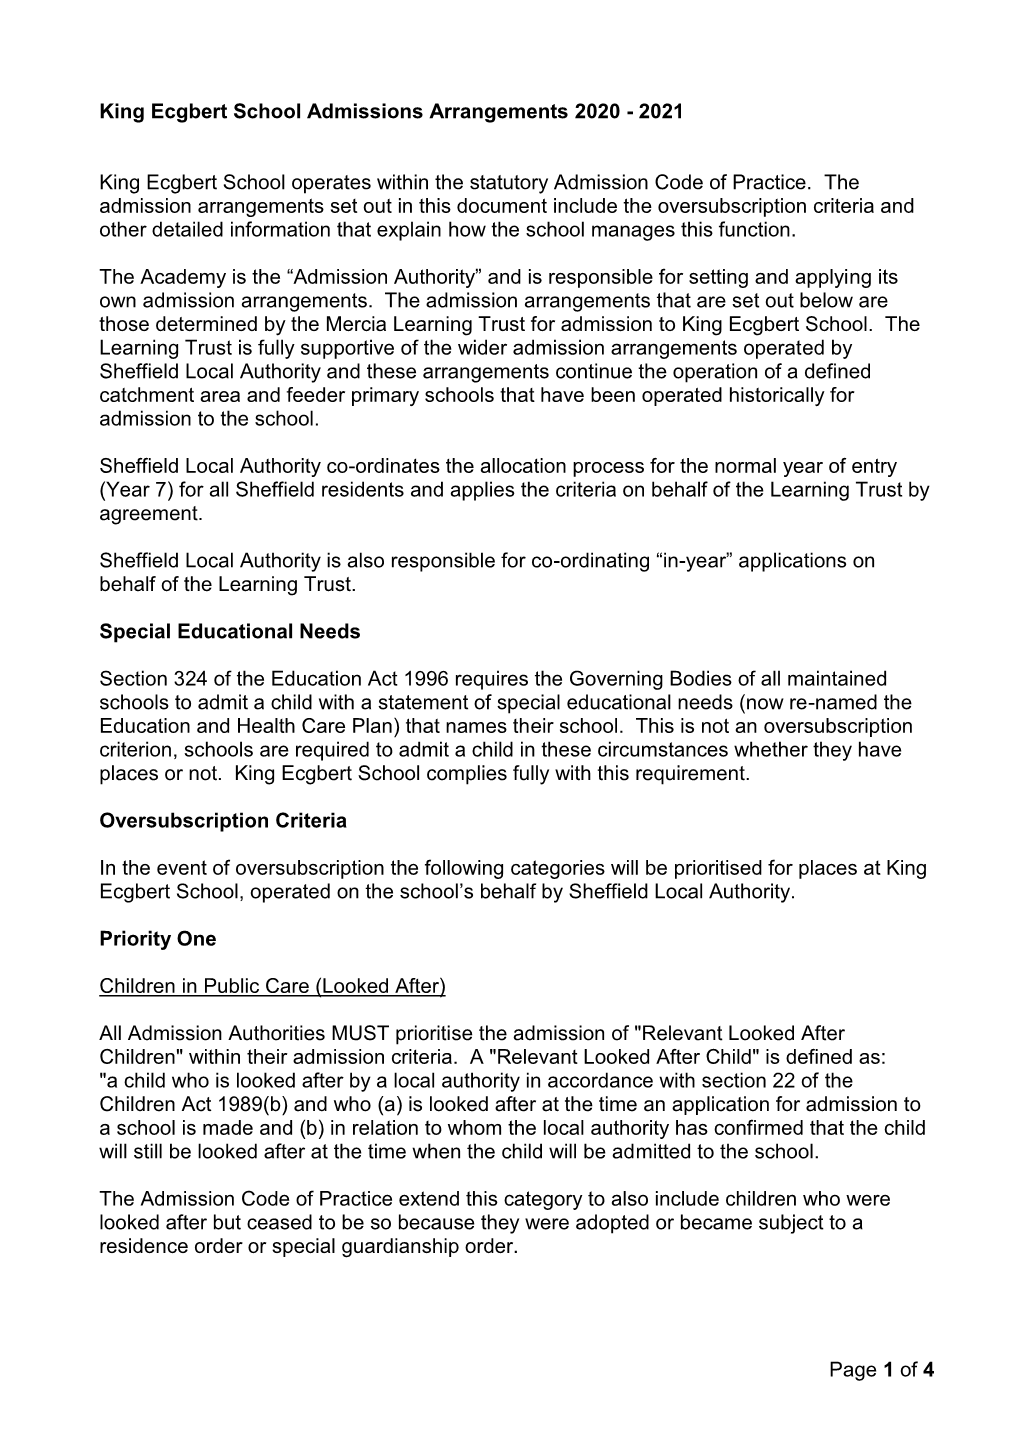 Page 1 of 4 King Ecgbert School Admissions Arrangements 2020